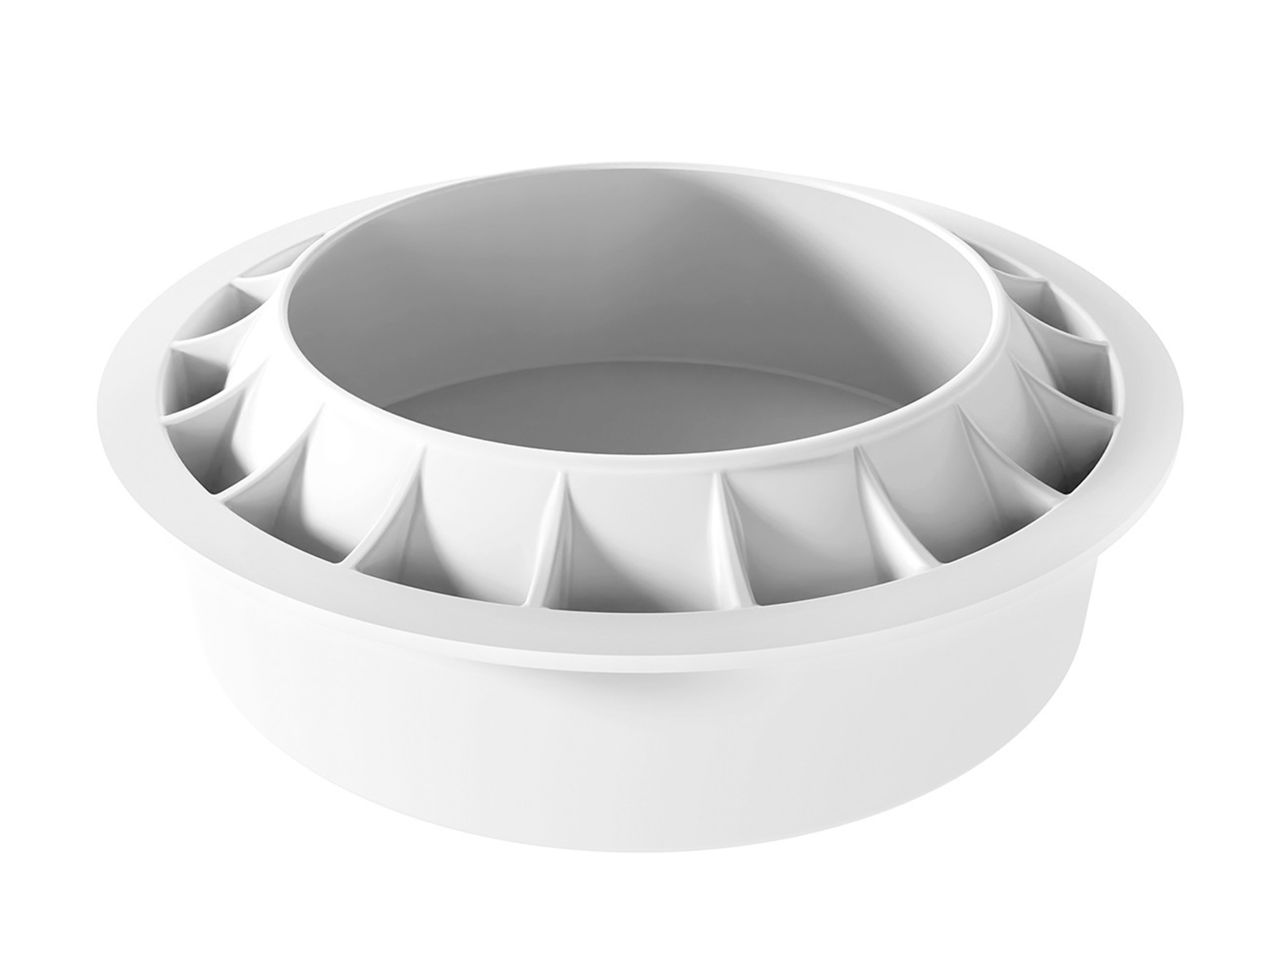 Moule de cuisson en silicone - Pan Kit Choco Globe